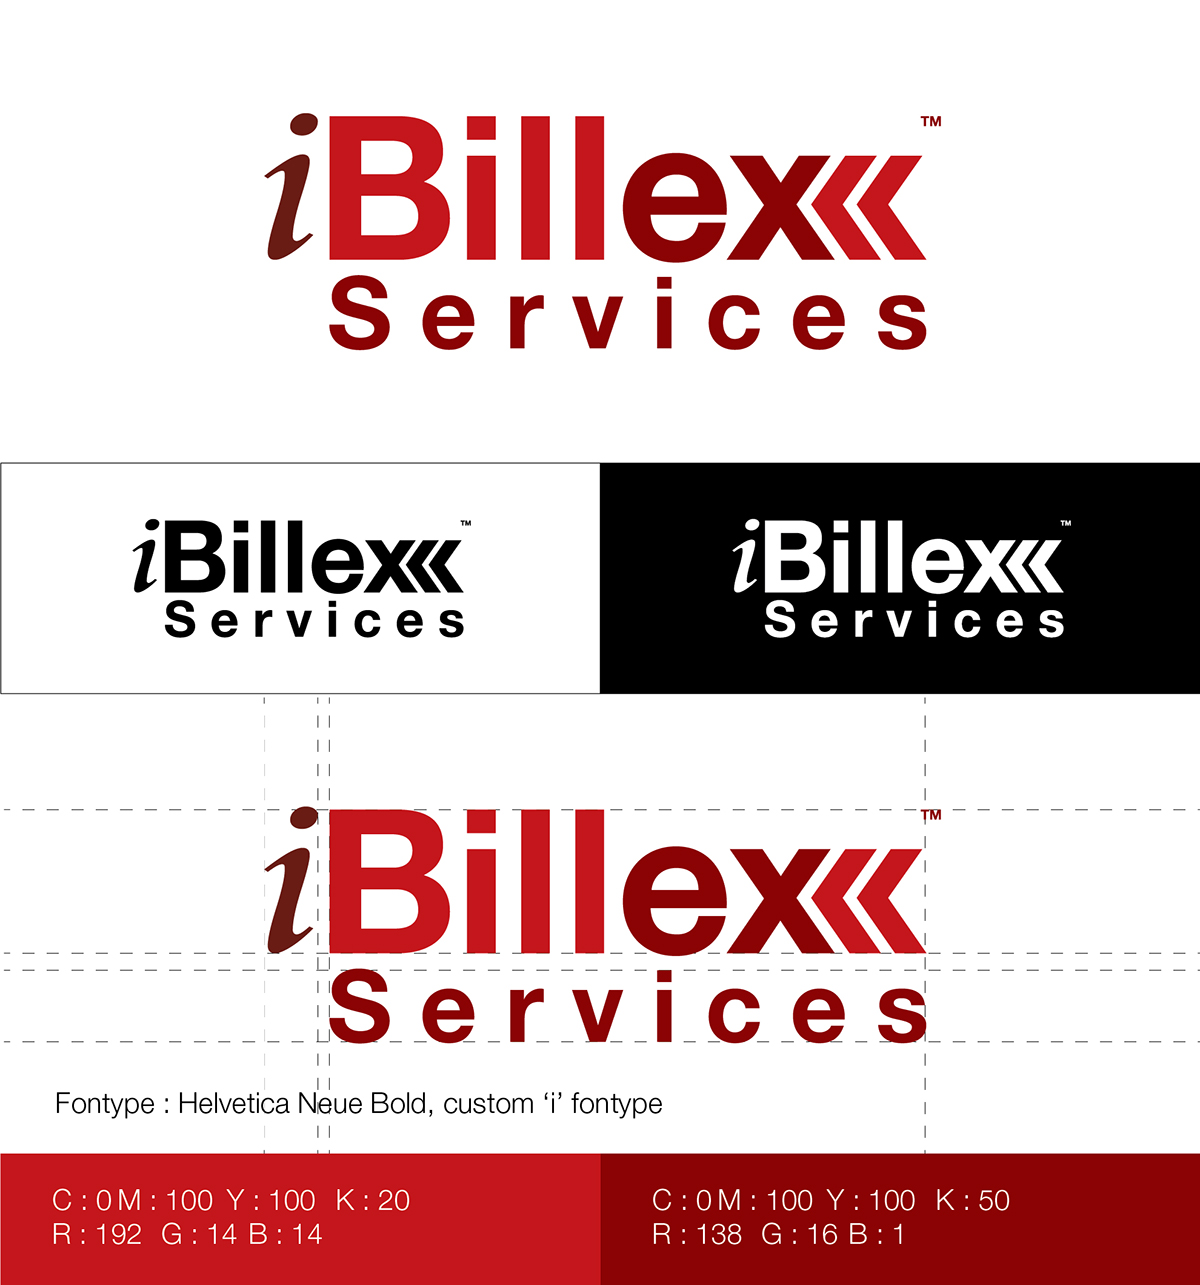 Billex logo rebranding